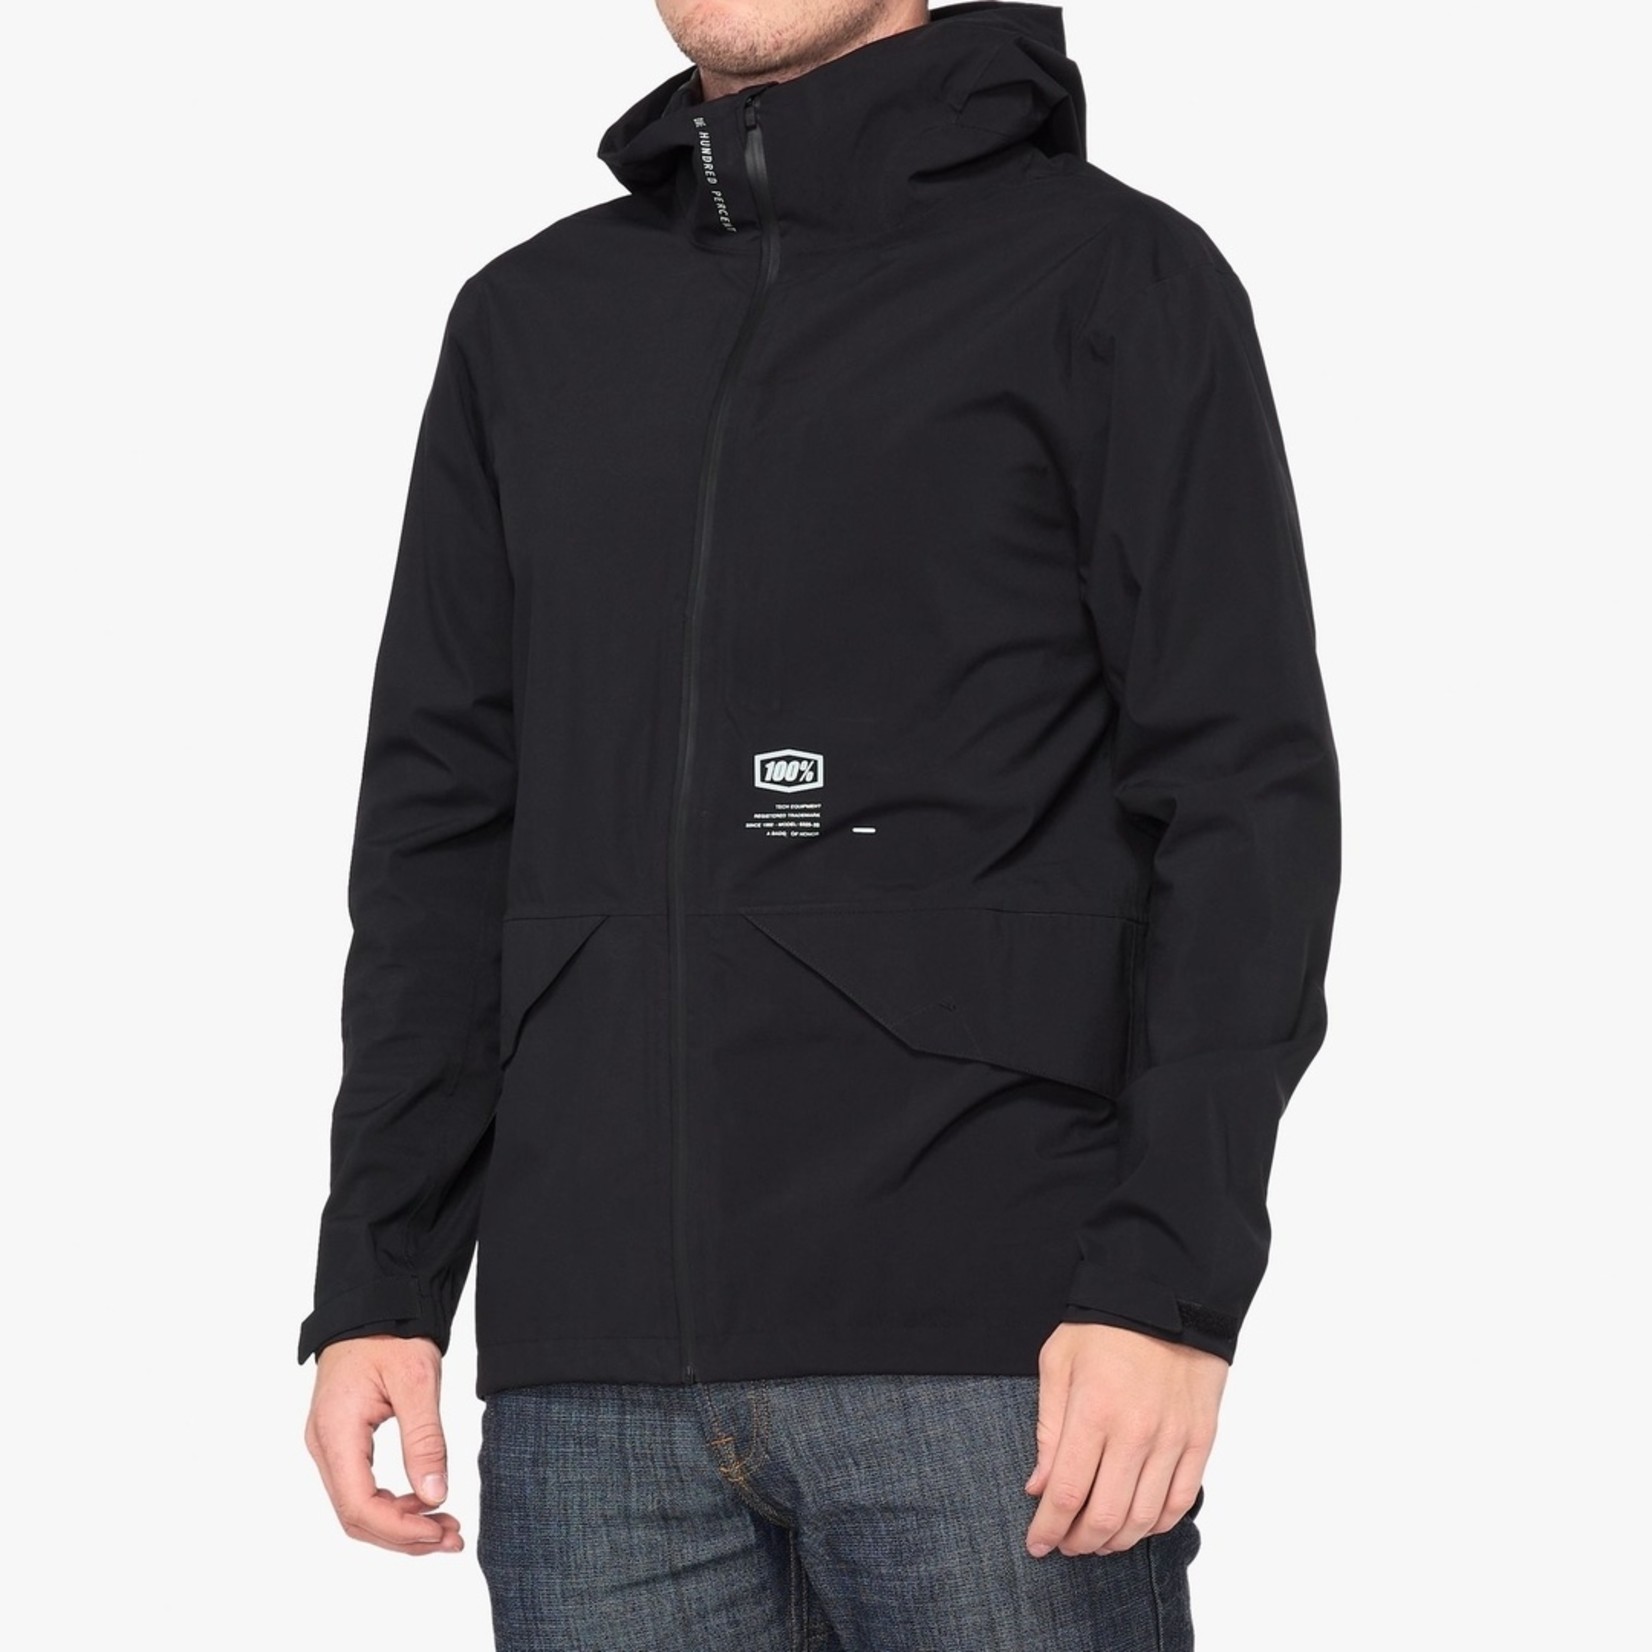 100 Percent 100% Hydromatic Waterproof Parka Jacket - Black 100% Polyester Waterproof